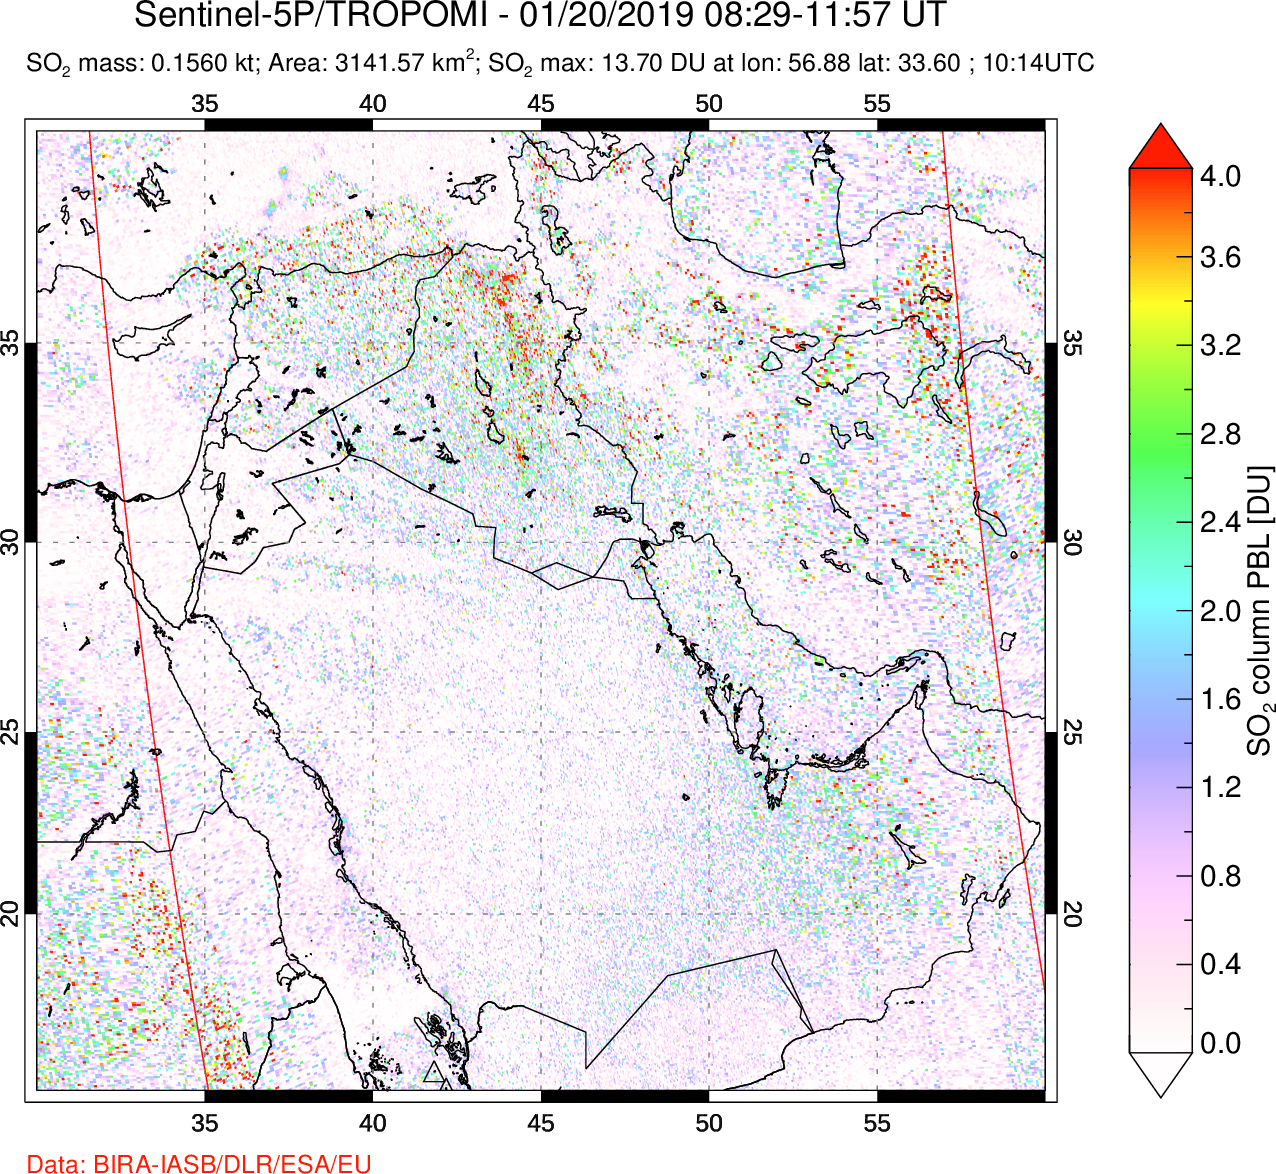 A sulfur dioxide image over Middle East on Jan 20, 2019.